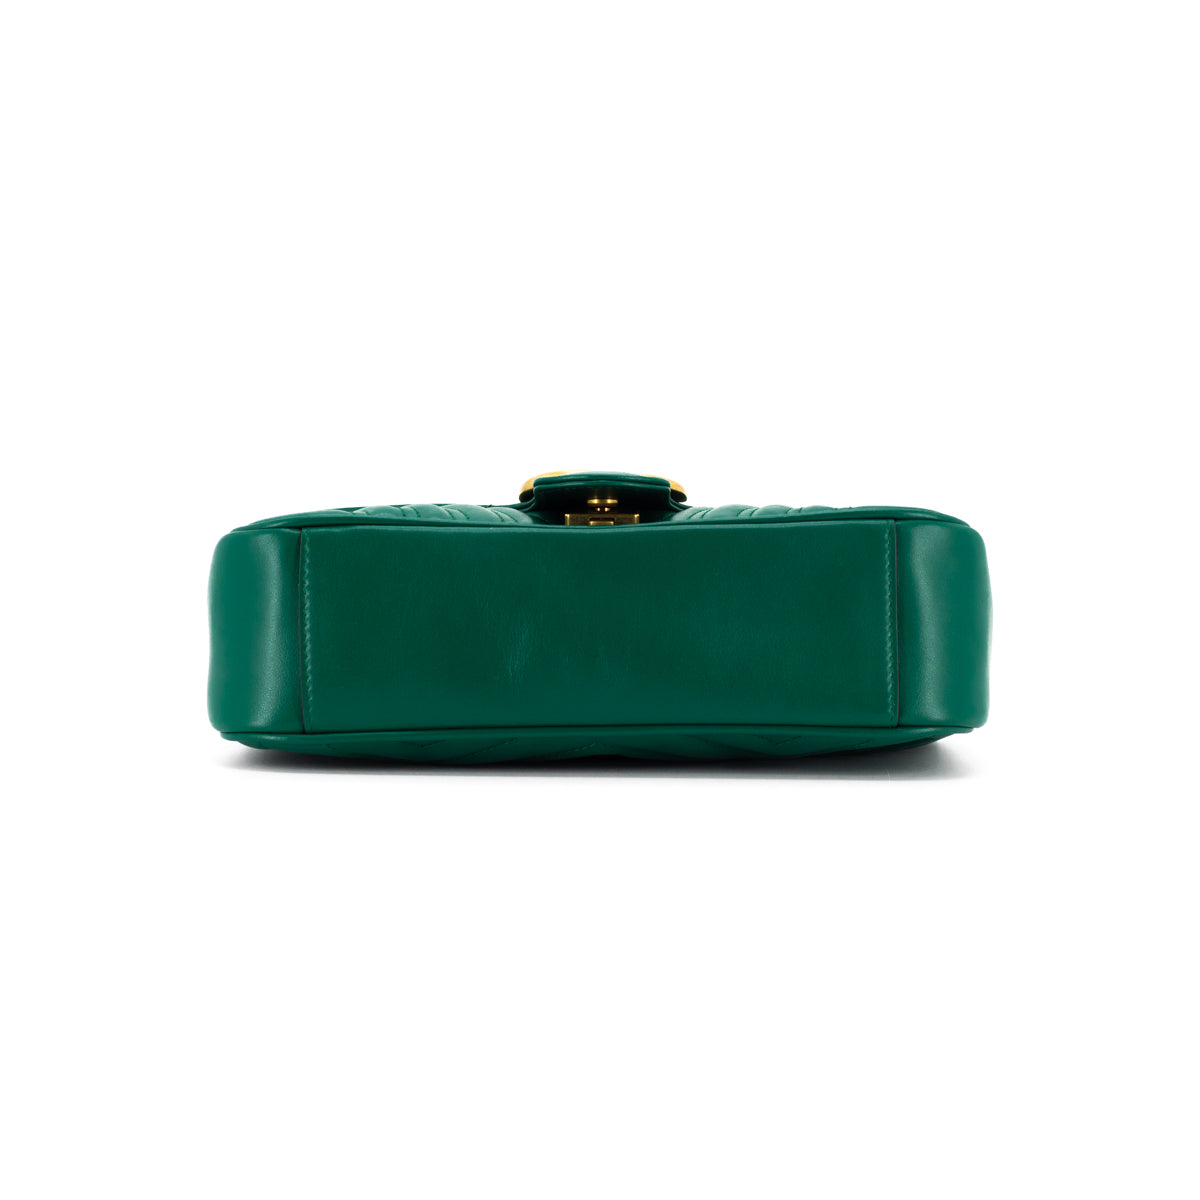 Gucci GG Marmont Matelassé Super Mini Bag in Green